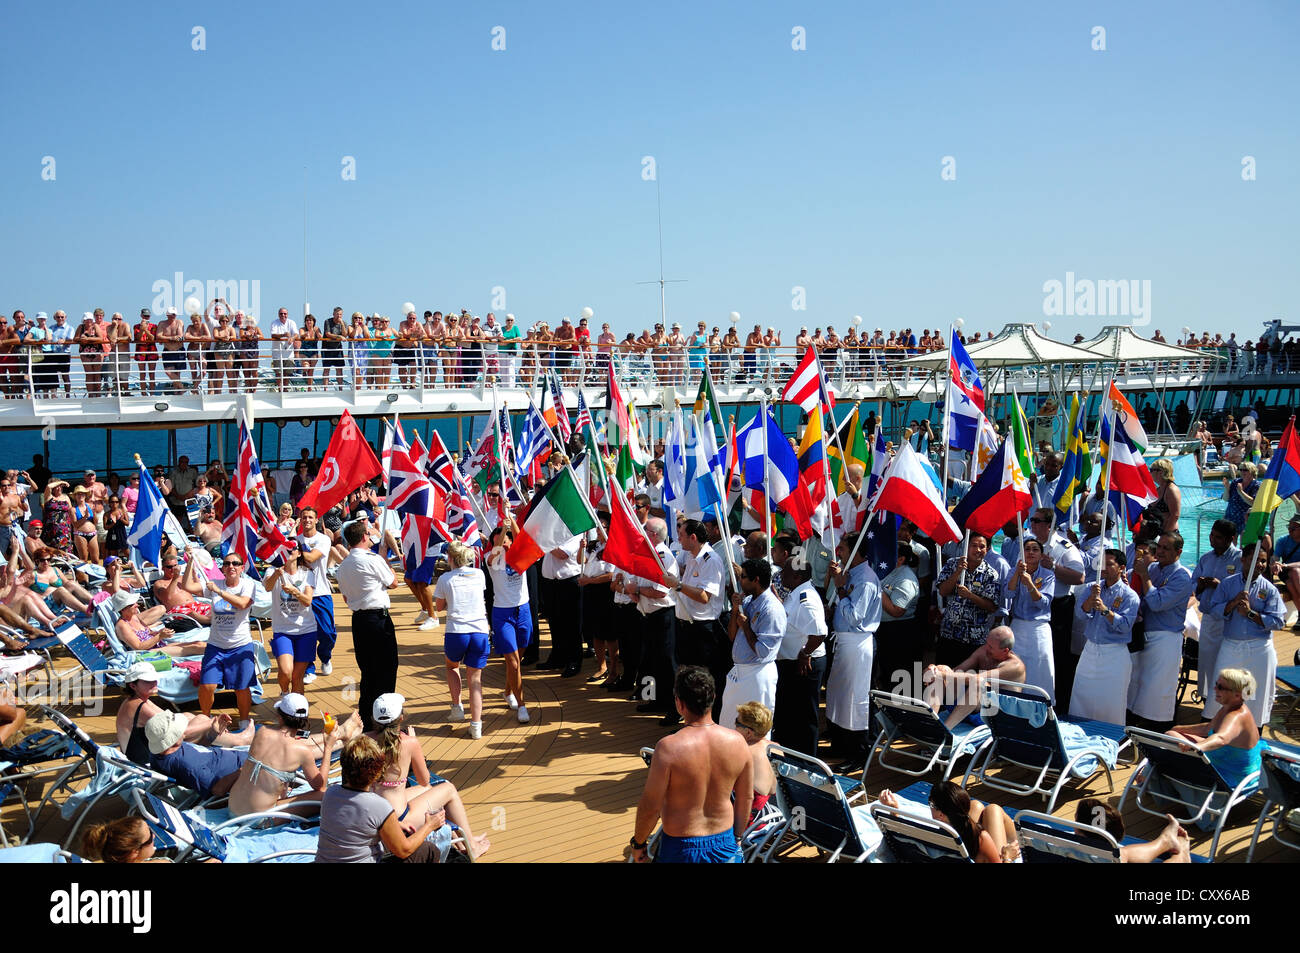 International staff procession on board Royal Caribbean 'Grandeur of the Seas' cruise ship, Adriatic Sea, Mediterranean, Europe Stock Photo